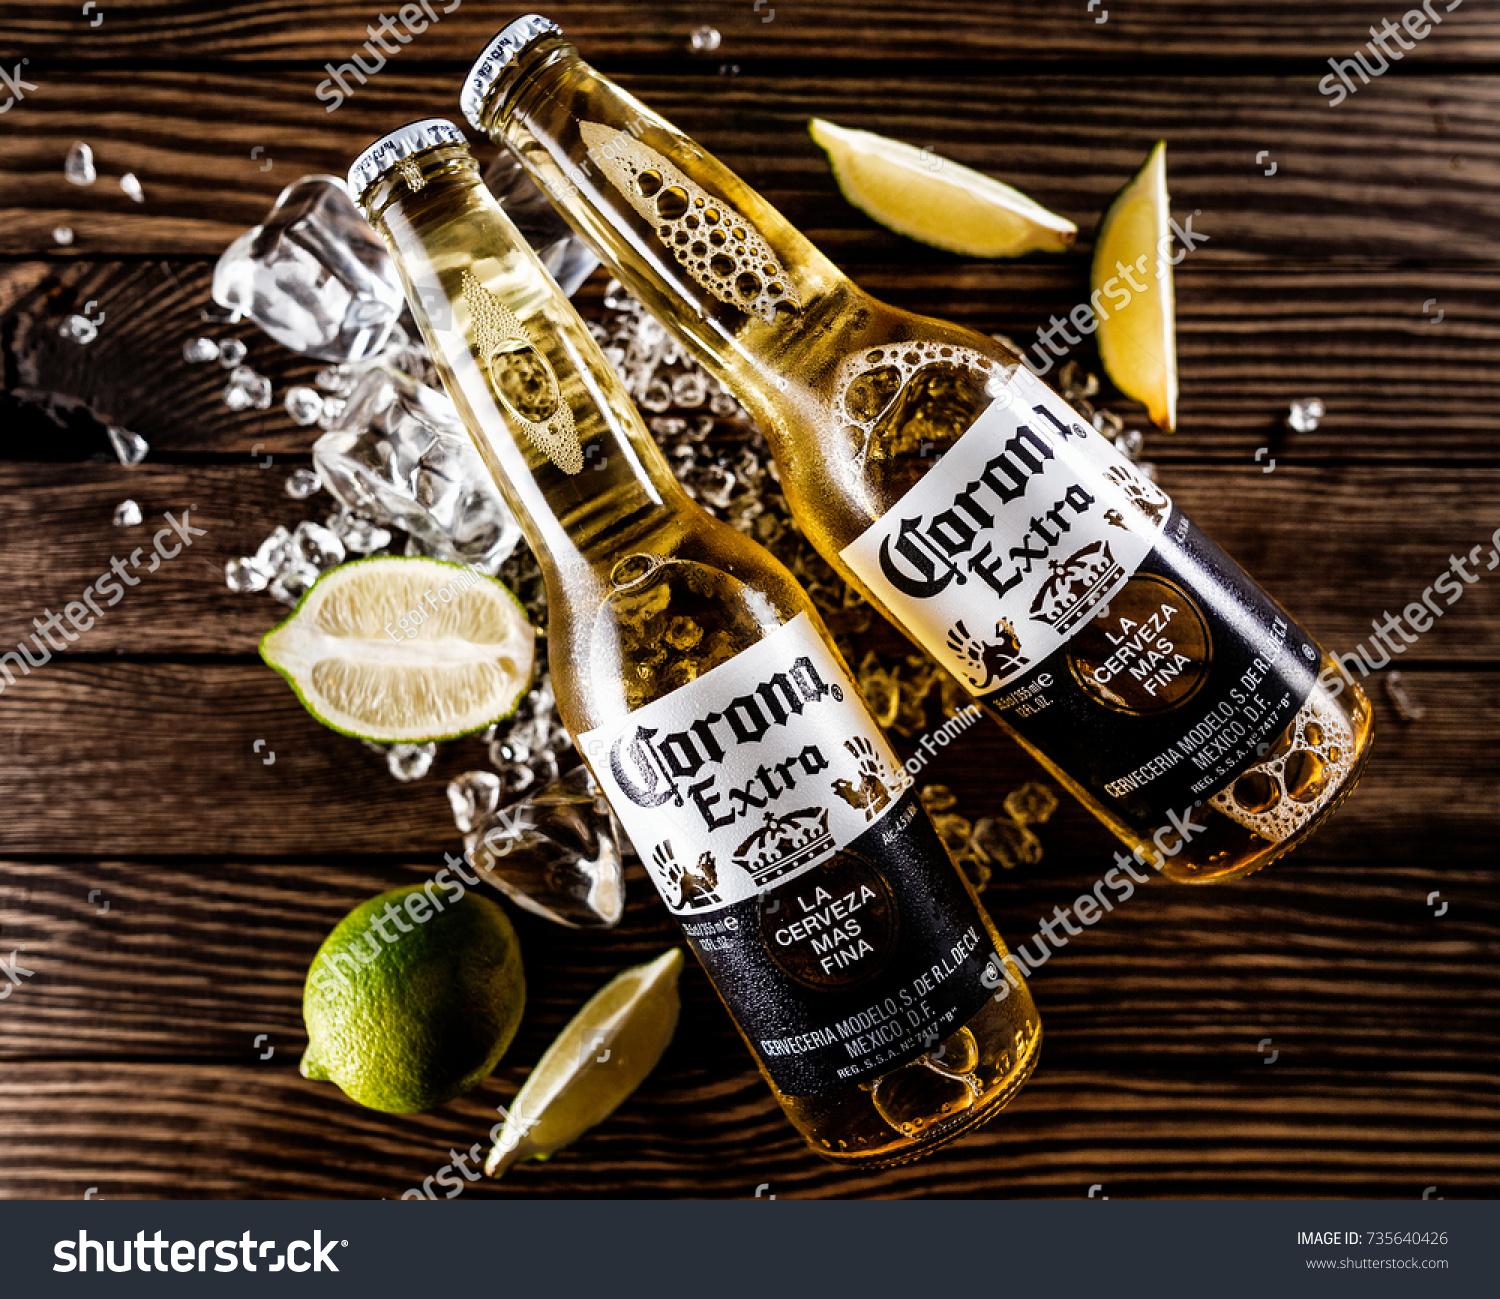 Corona Beer Image Browse Stock Photos Vectors